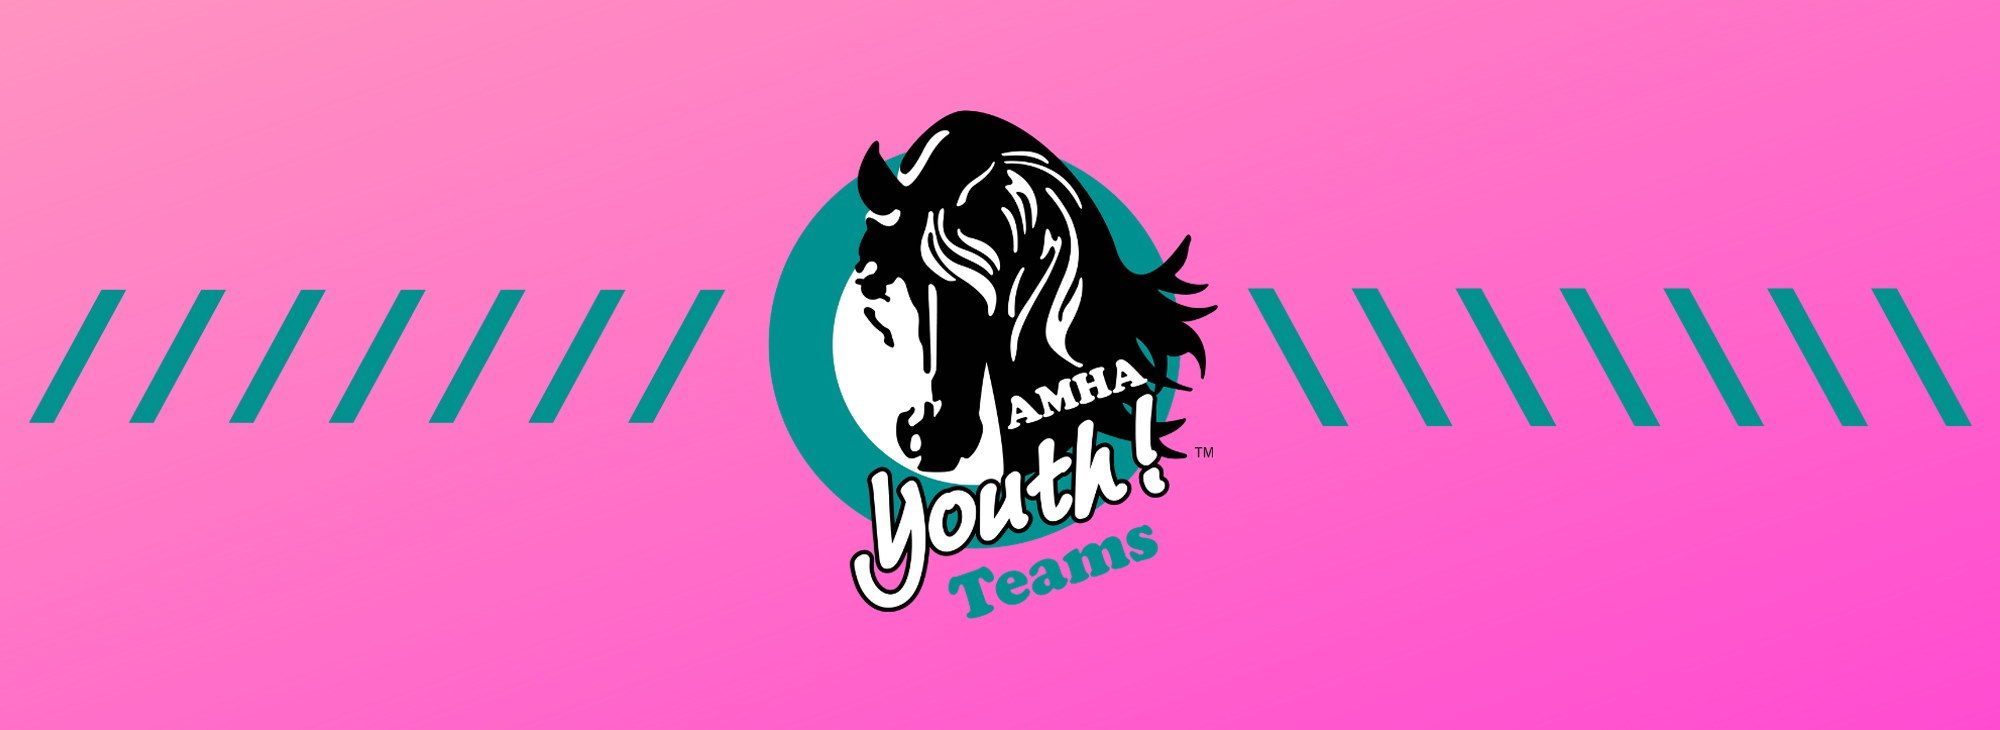 news_youth_teams_web_banner.jpg